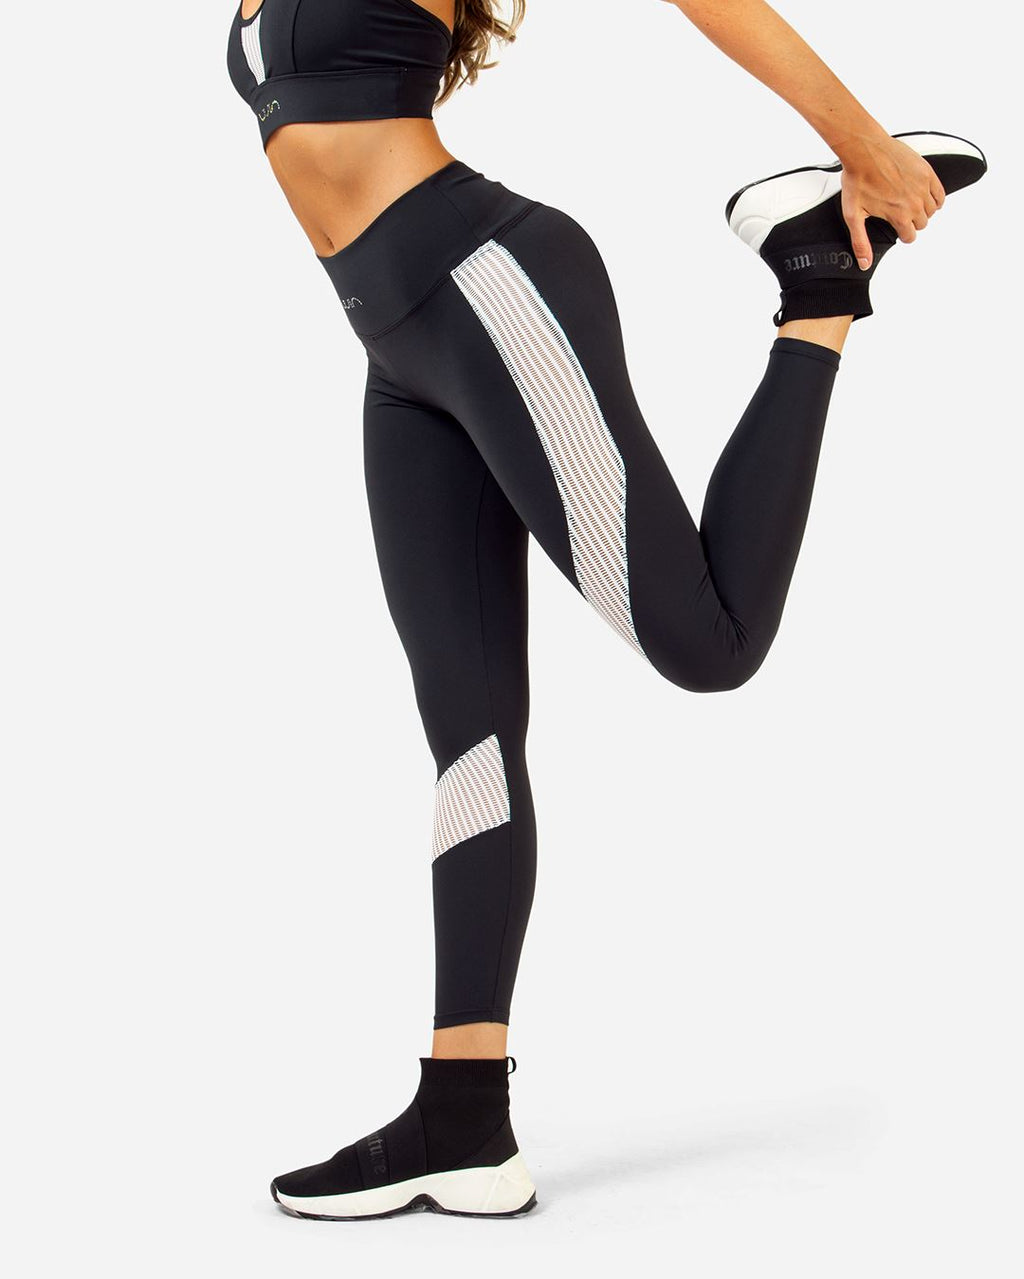 Legging Front Renda - BLACK/WH WinFitnesswear 